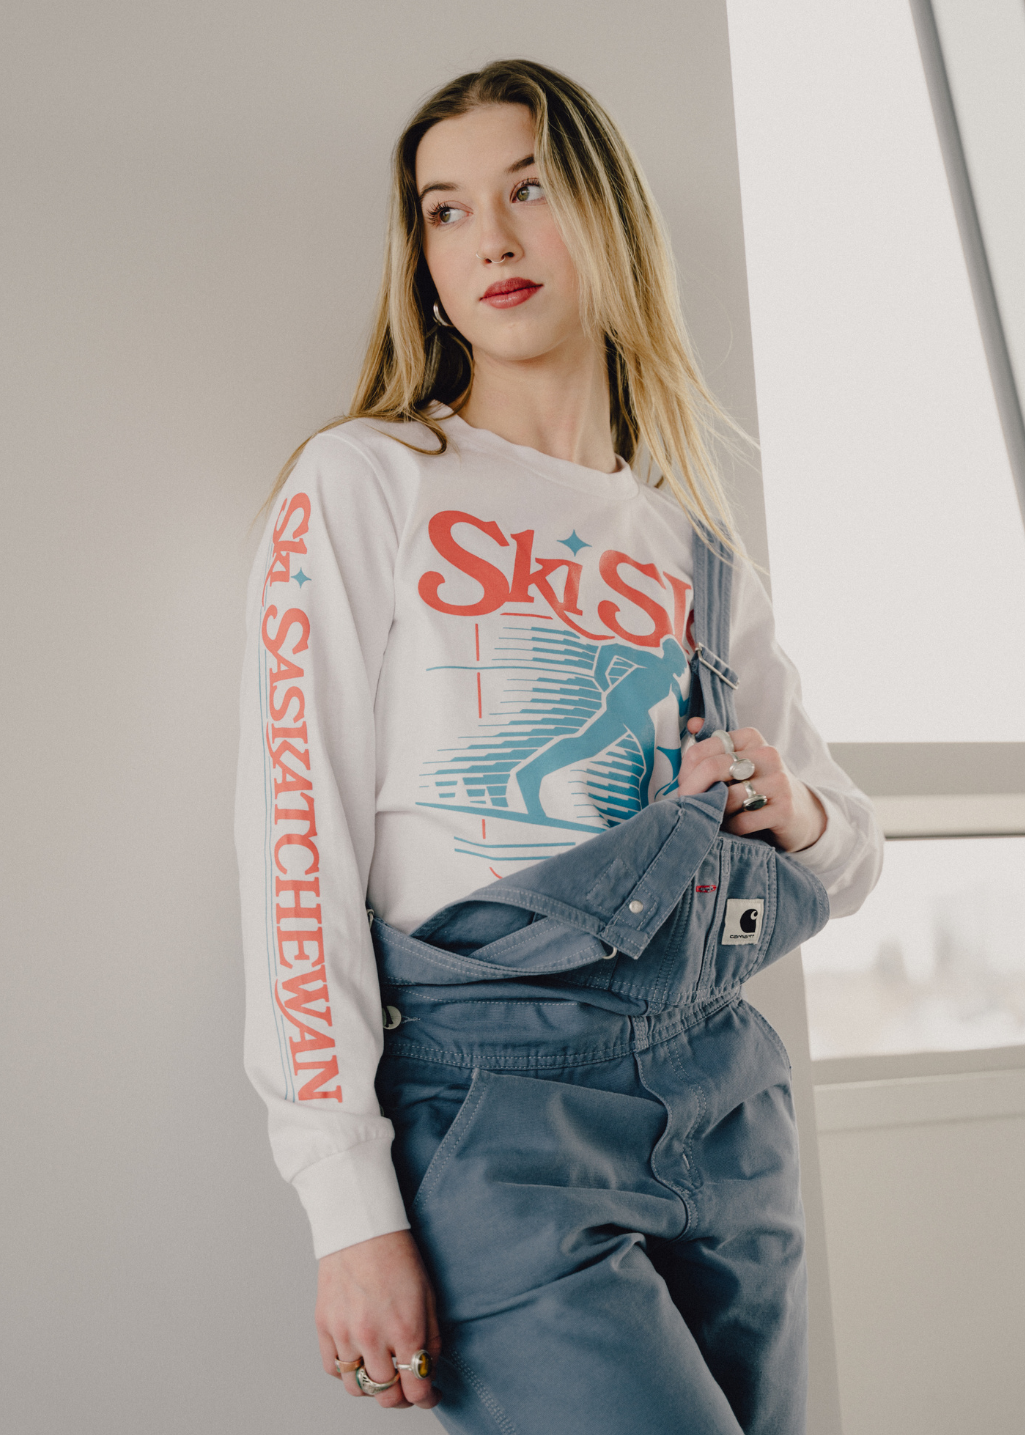 Ski SK Long Sleeve | Whiteout | Unisex and Ladies - Hardpressed Print Studio Inc.